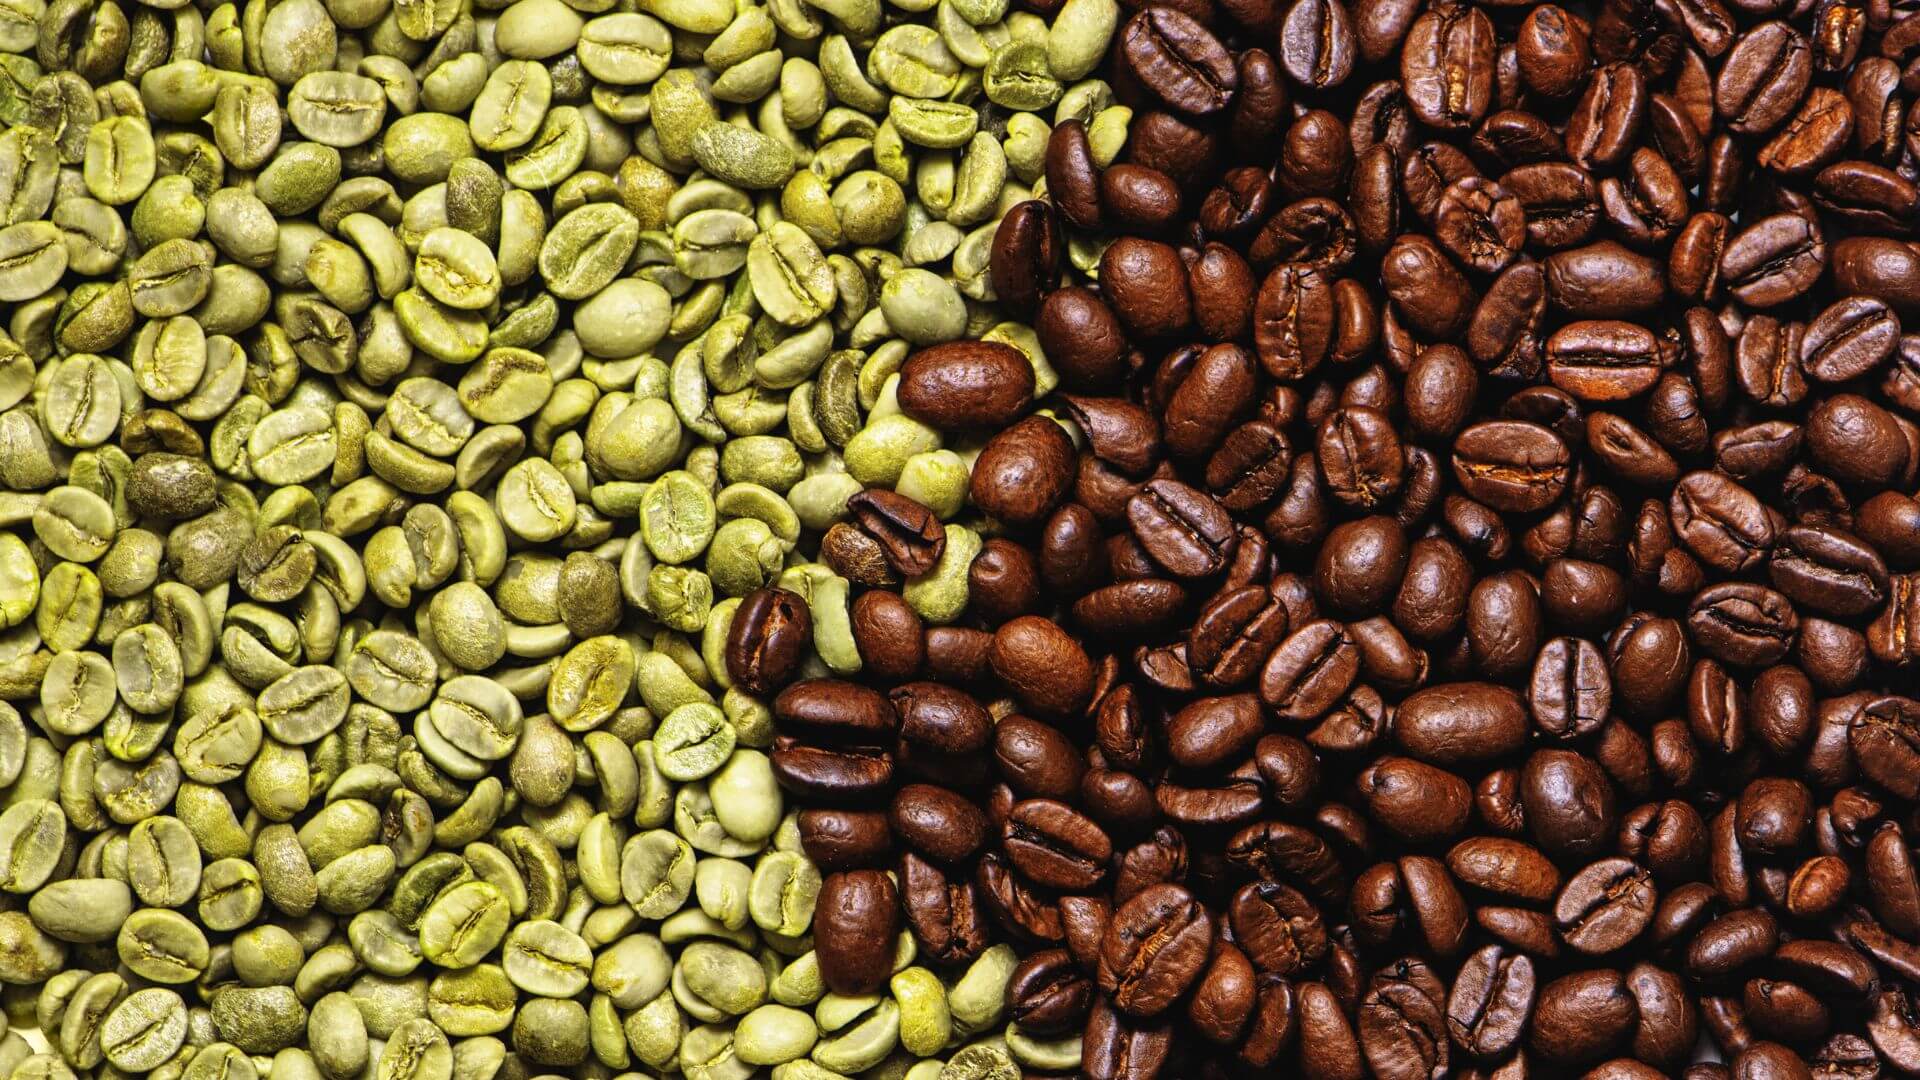 Green coffee and Roasted coffee